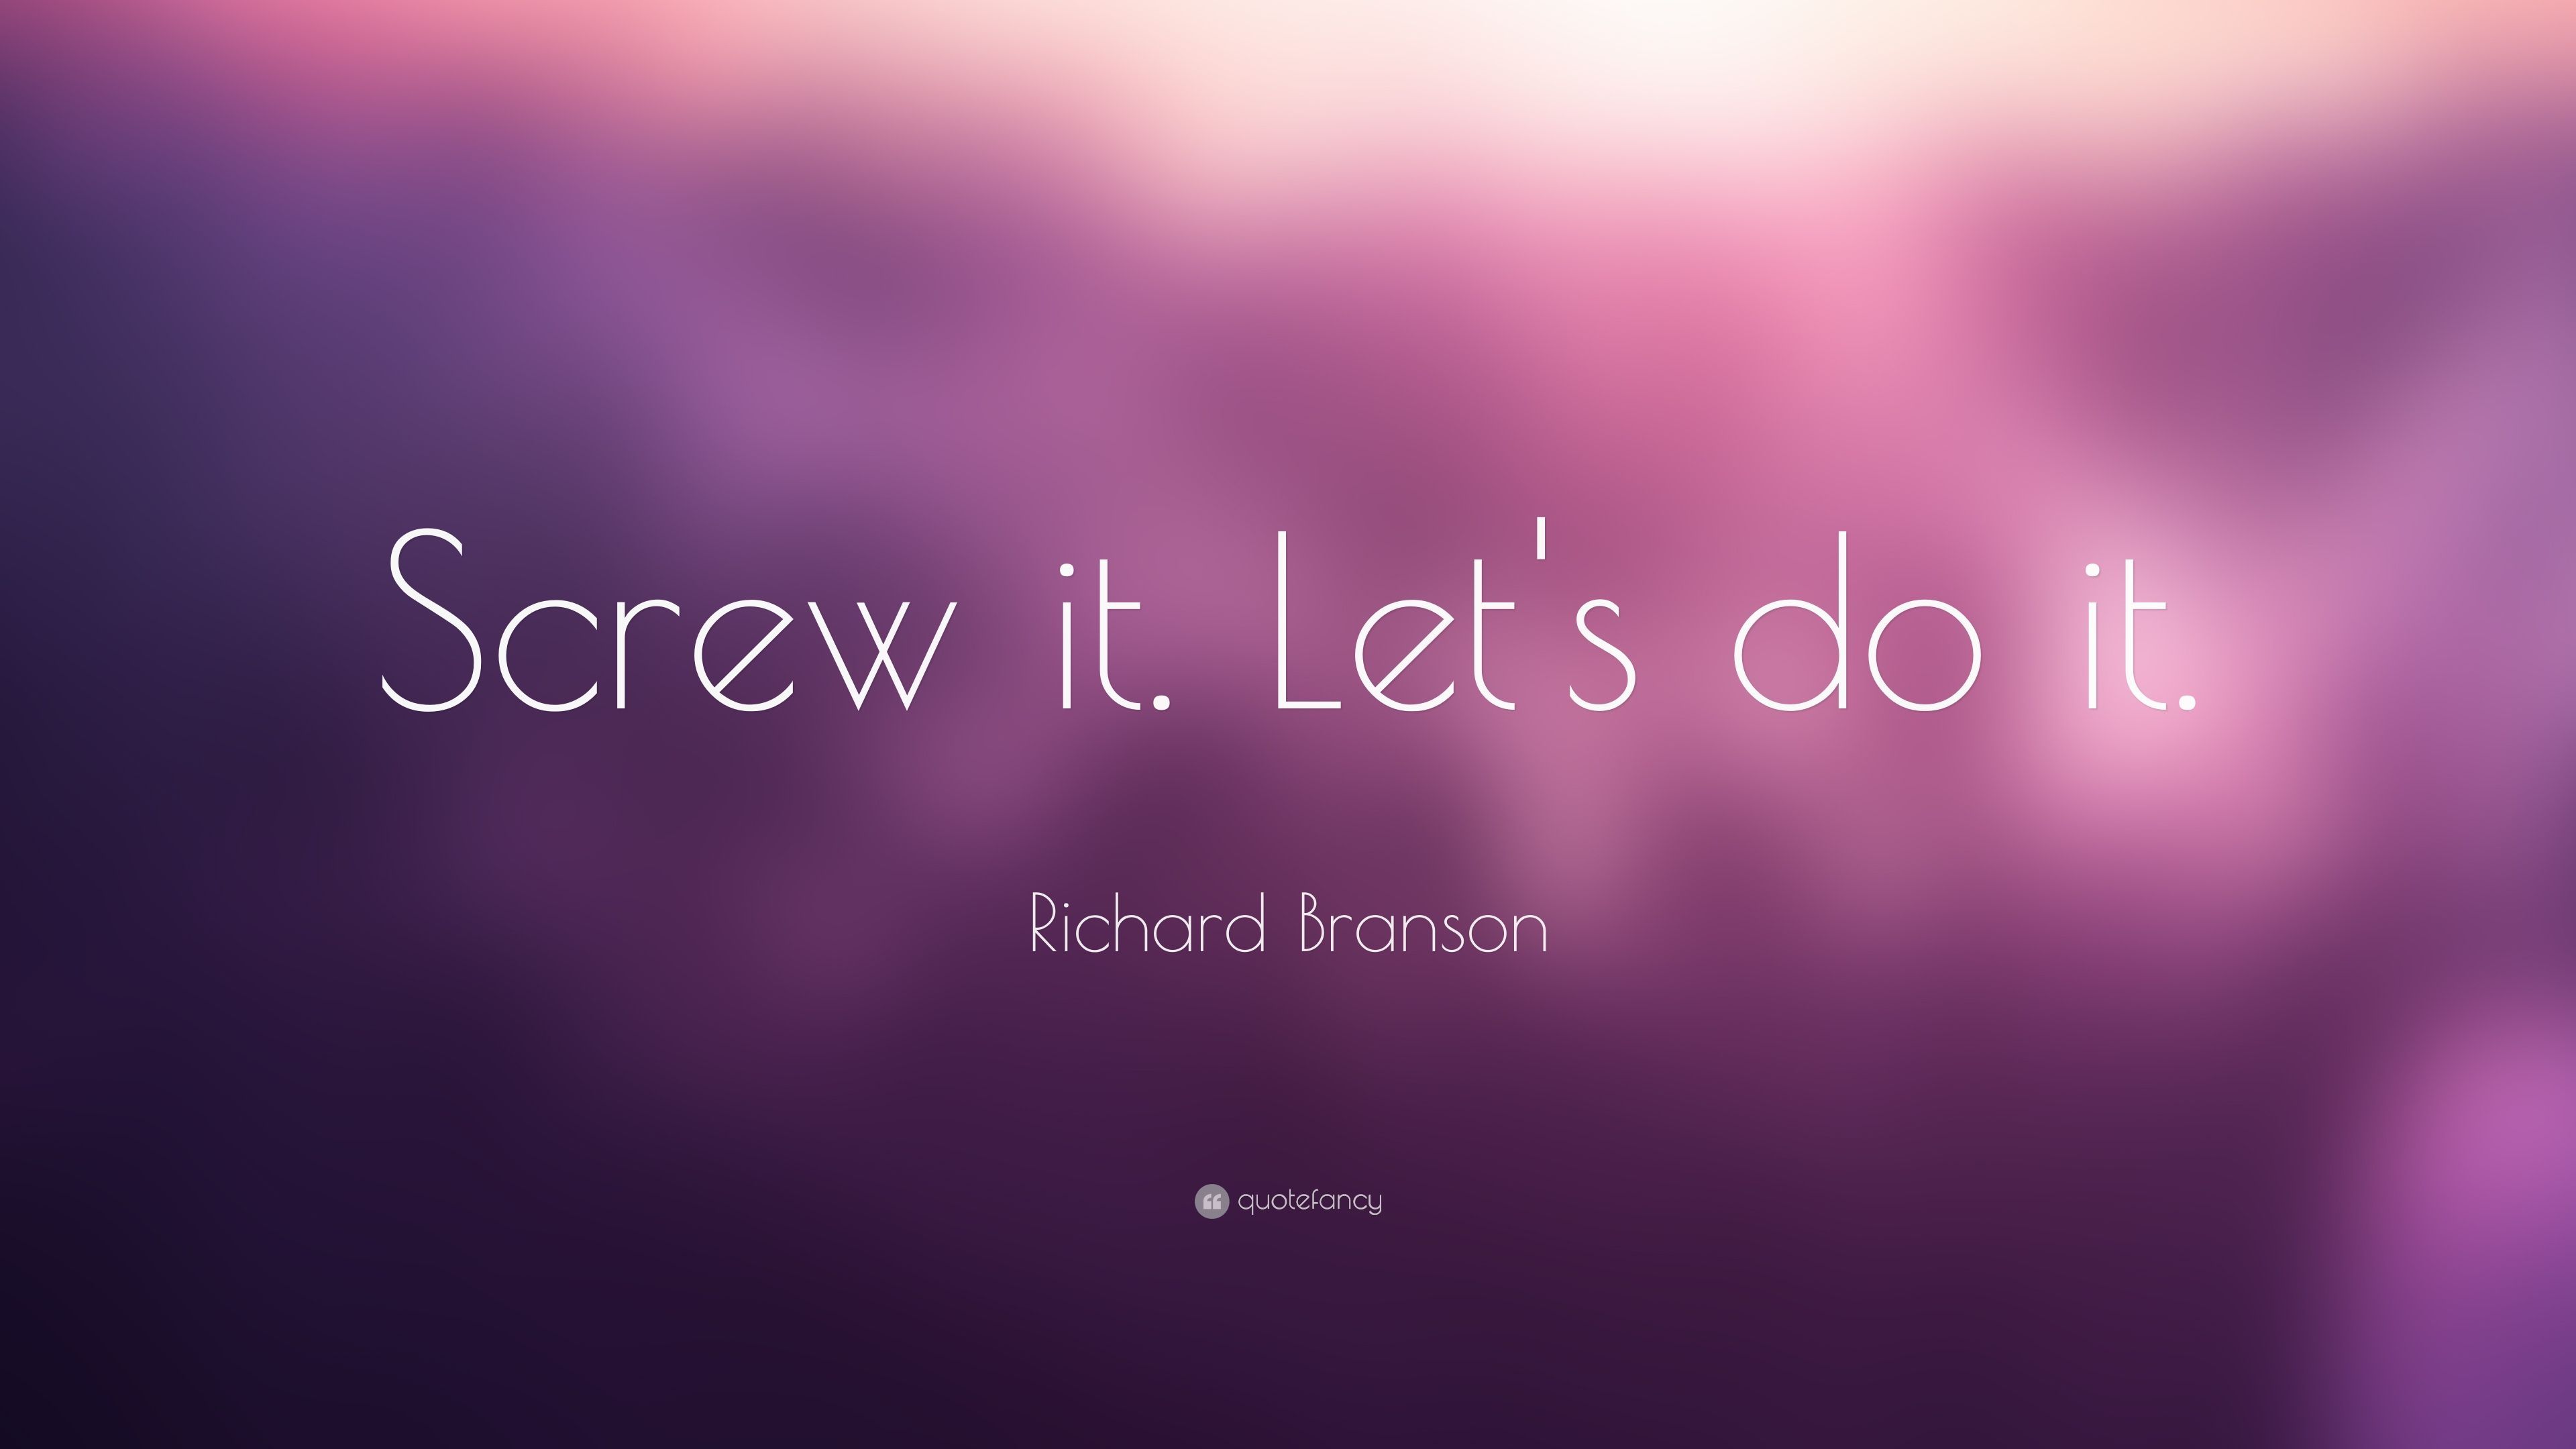 Richard Branson Quote: “Screw it. Let's do it.” 14 wallpaper. Richard branson quotes, Go for it quotes, Richard branson